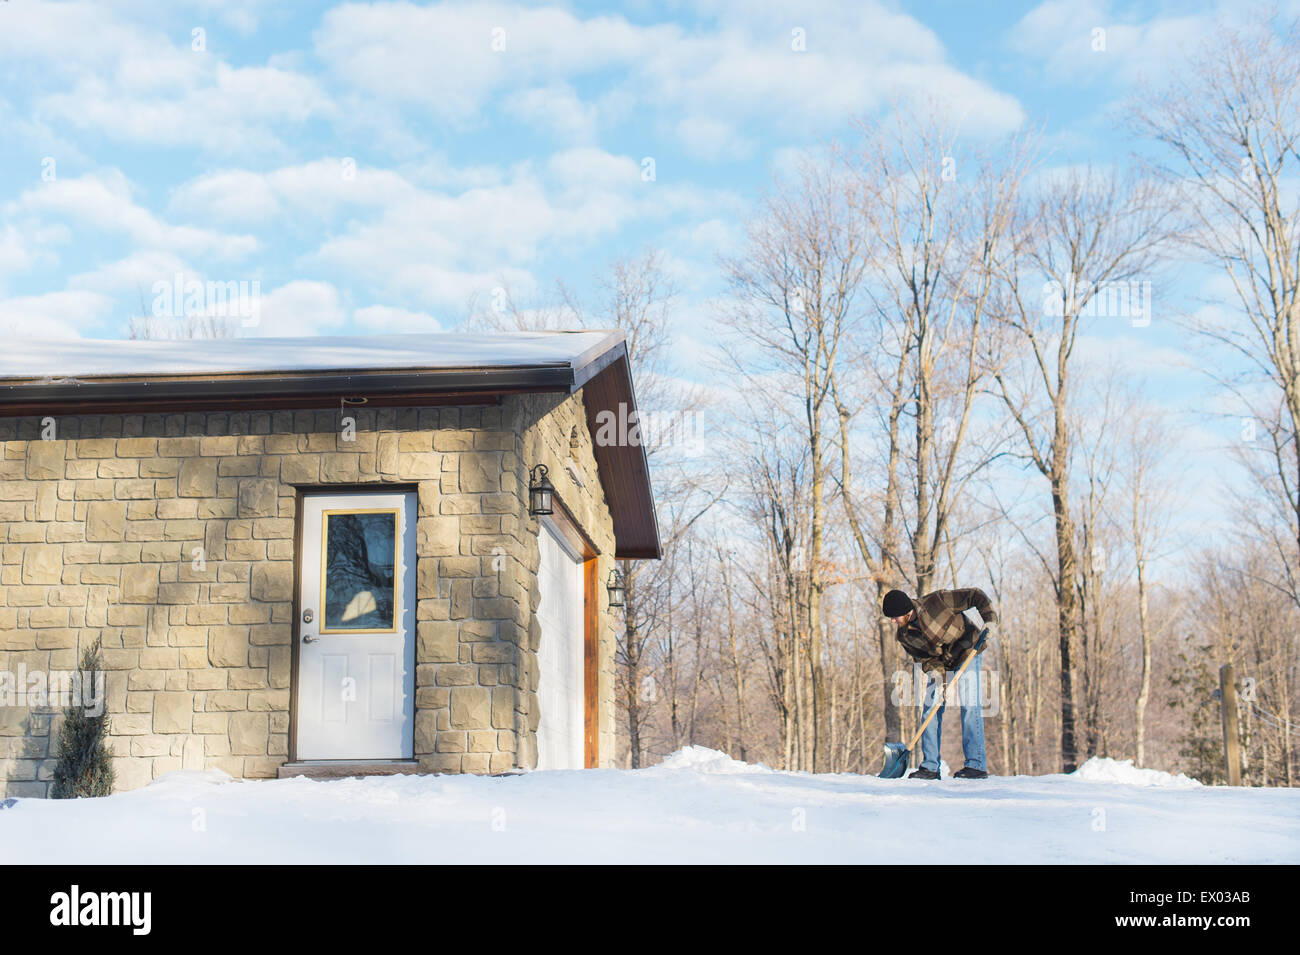 Homme de pelleter de la neige, Young's Point, Ontario, Canada Banque D'Images